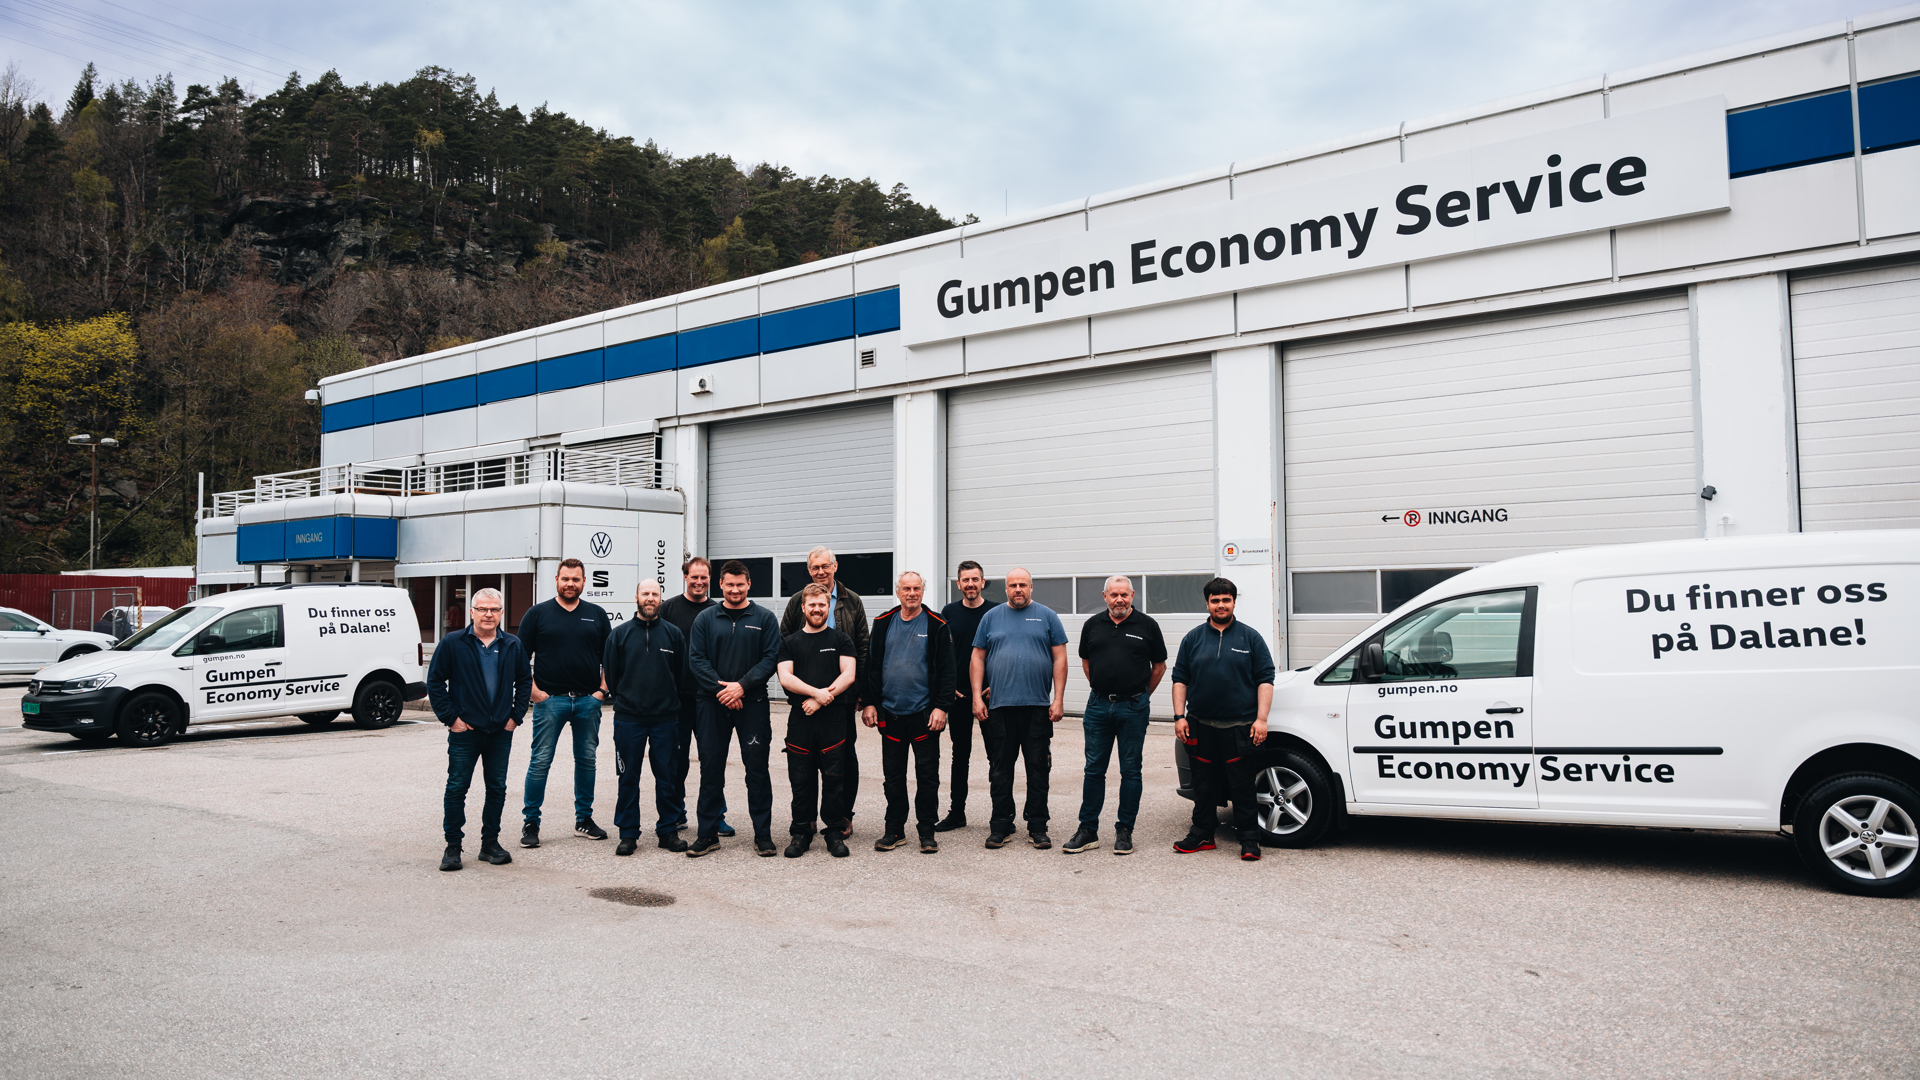 Gumpen Economy Service